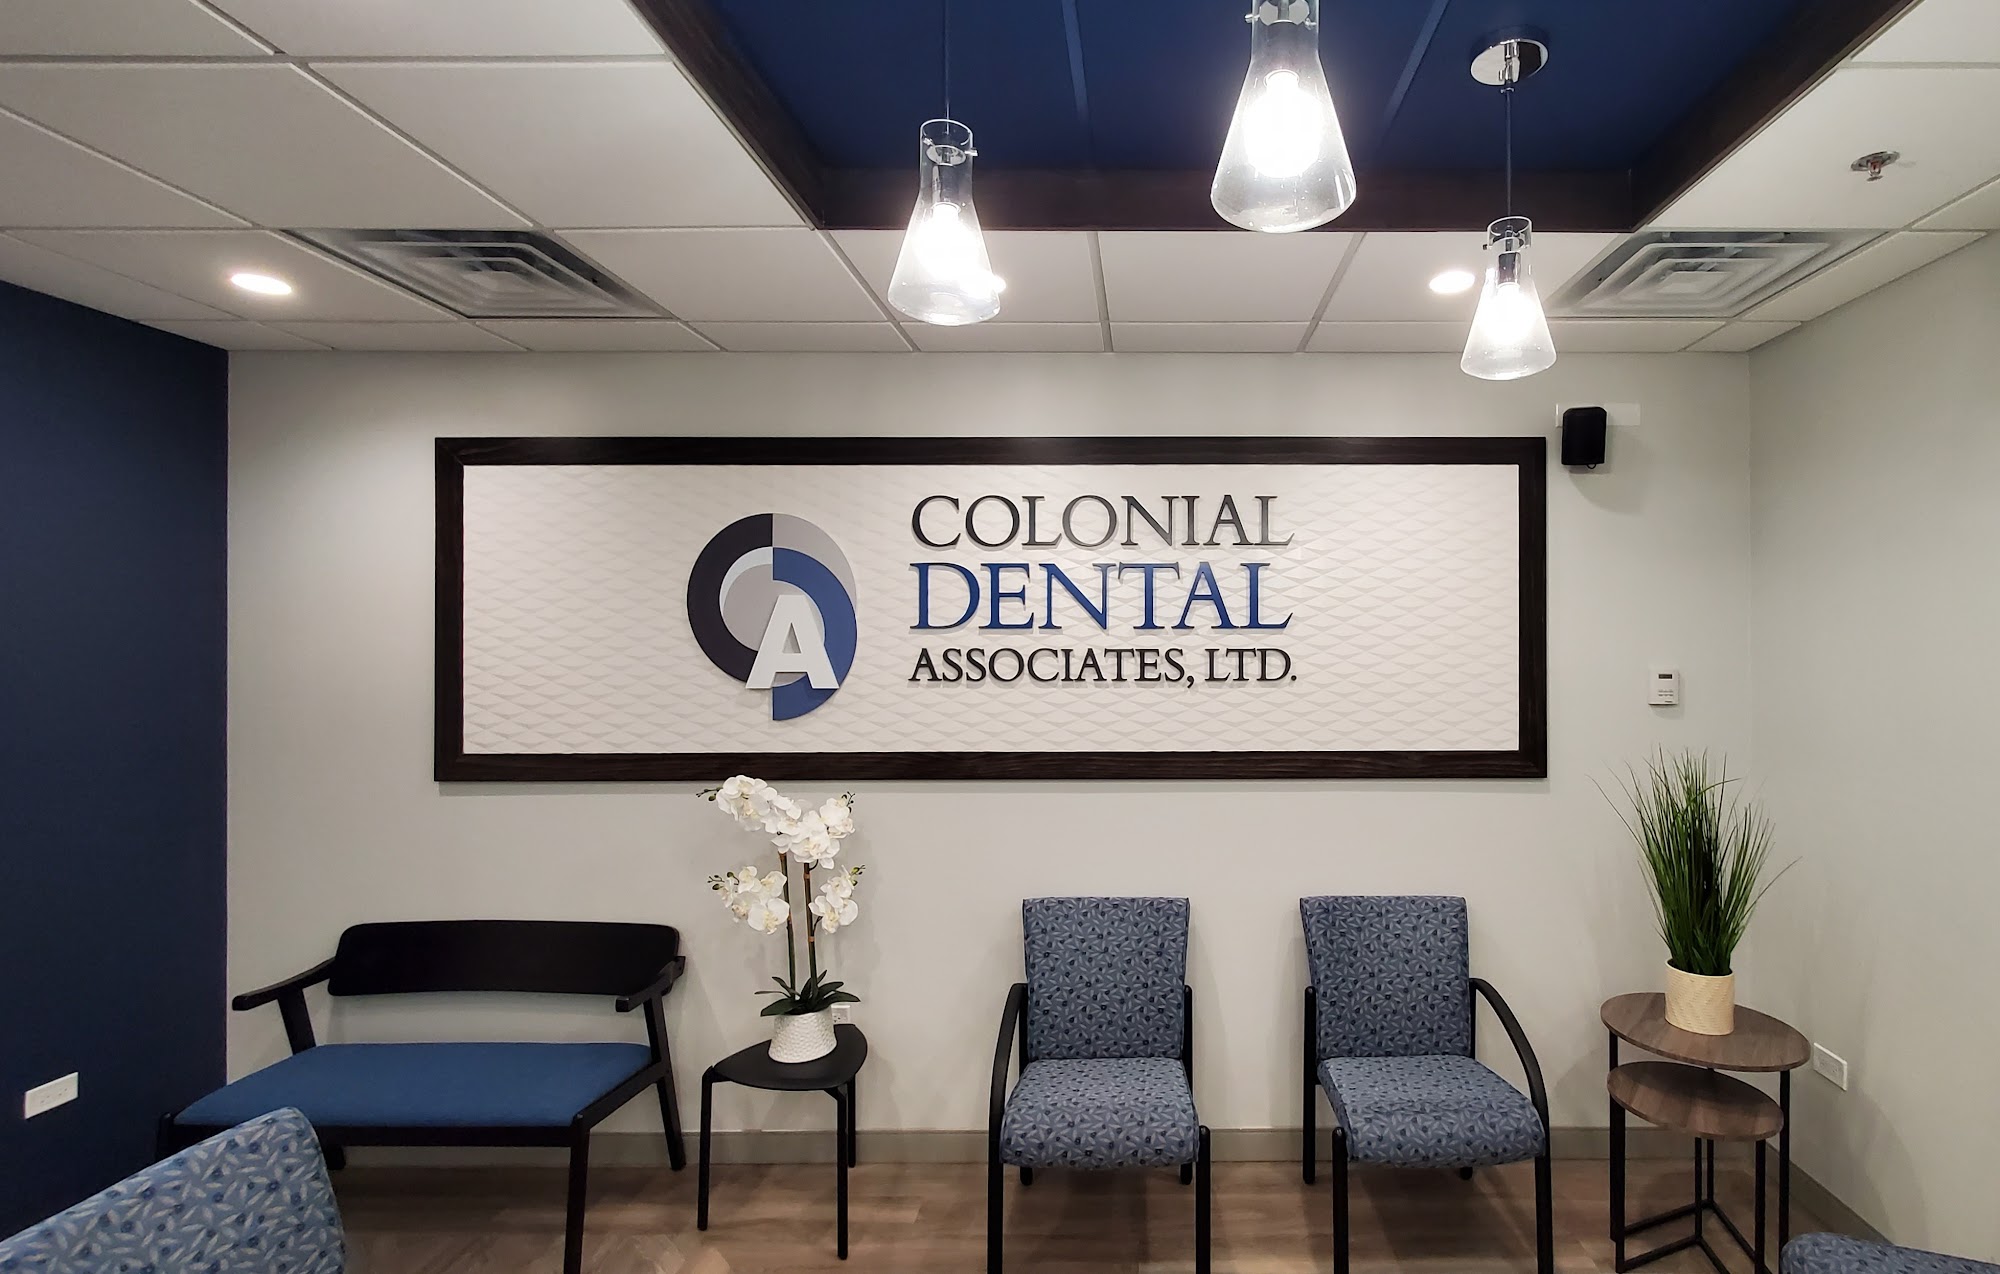 Colonial Dental Associates, Ltd.